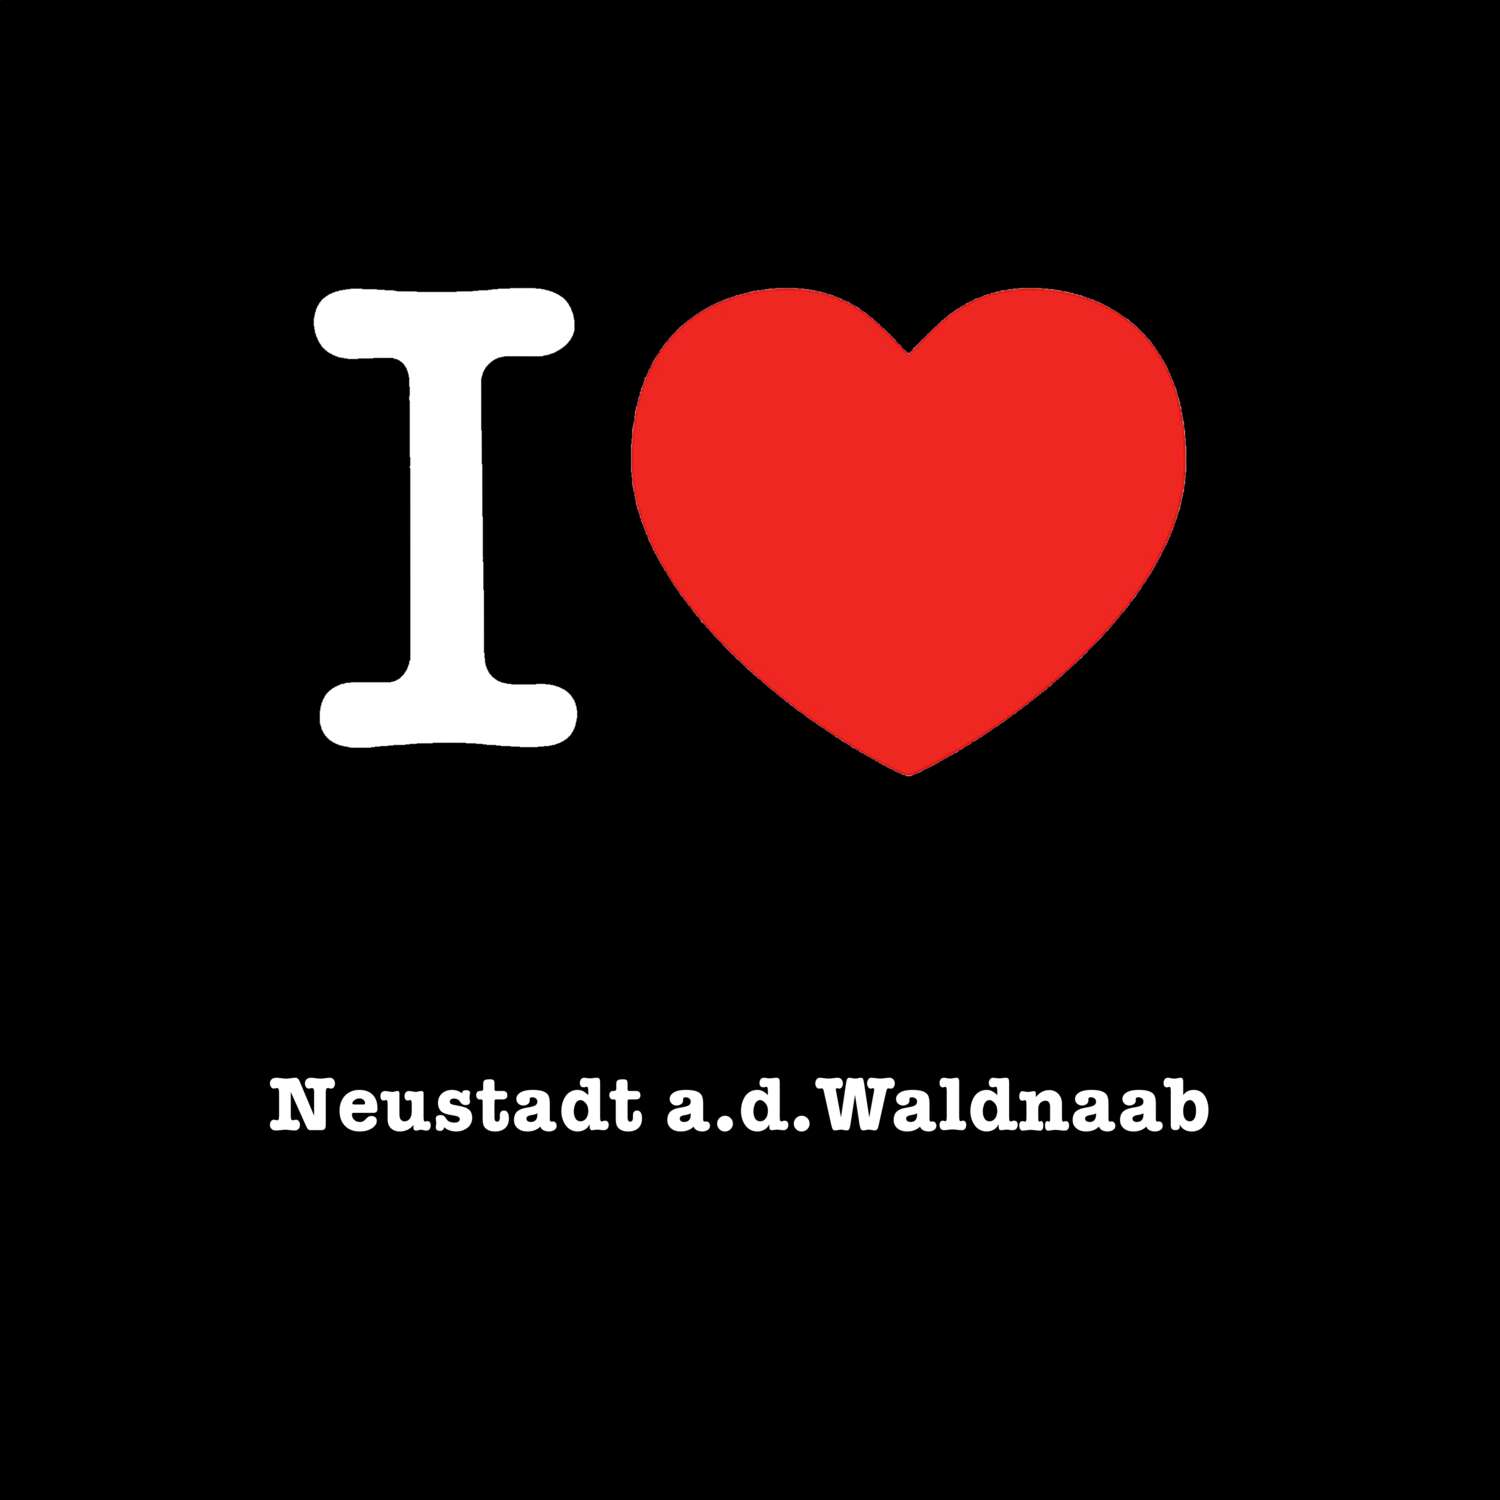 Neustadt a.d.Waldnaab T-Shirt »I love«